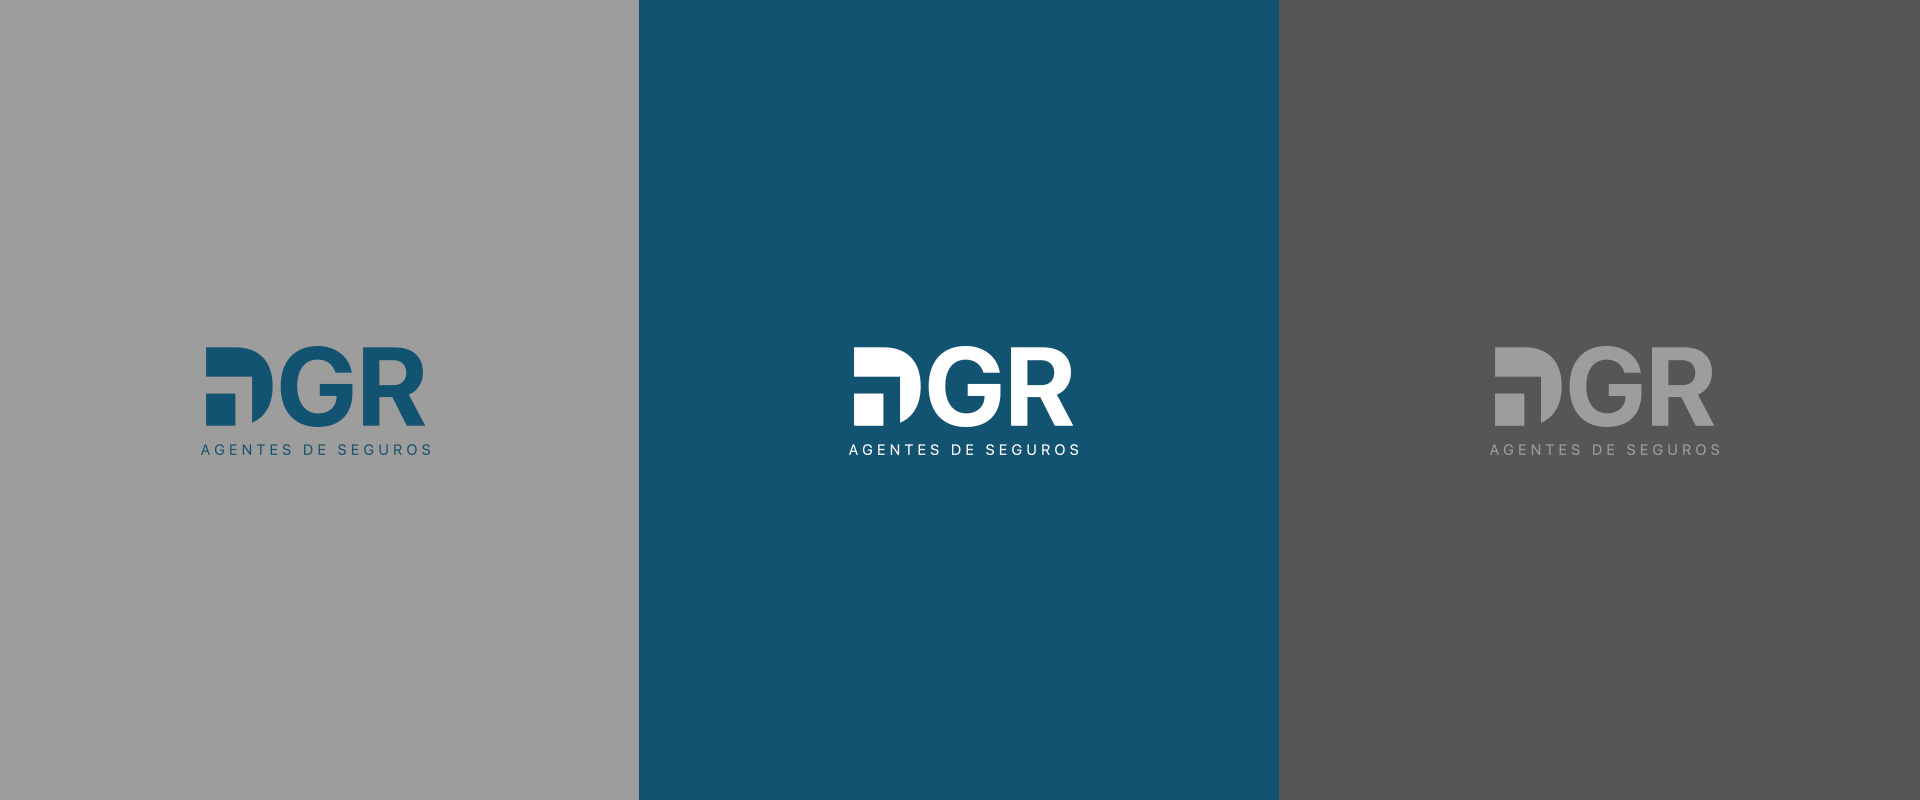 Aplicaciones de Logo DGR